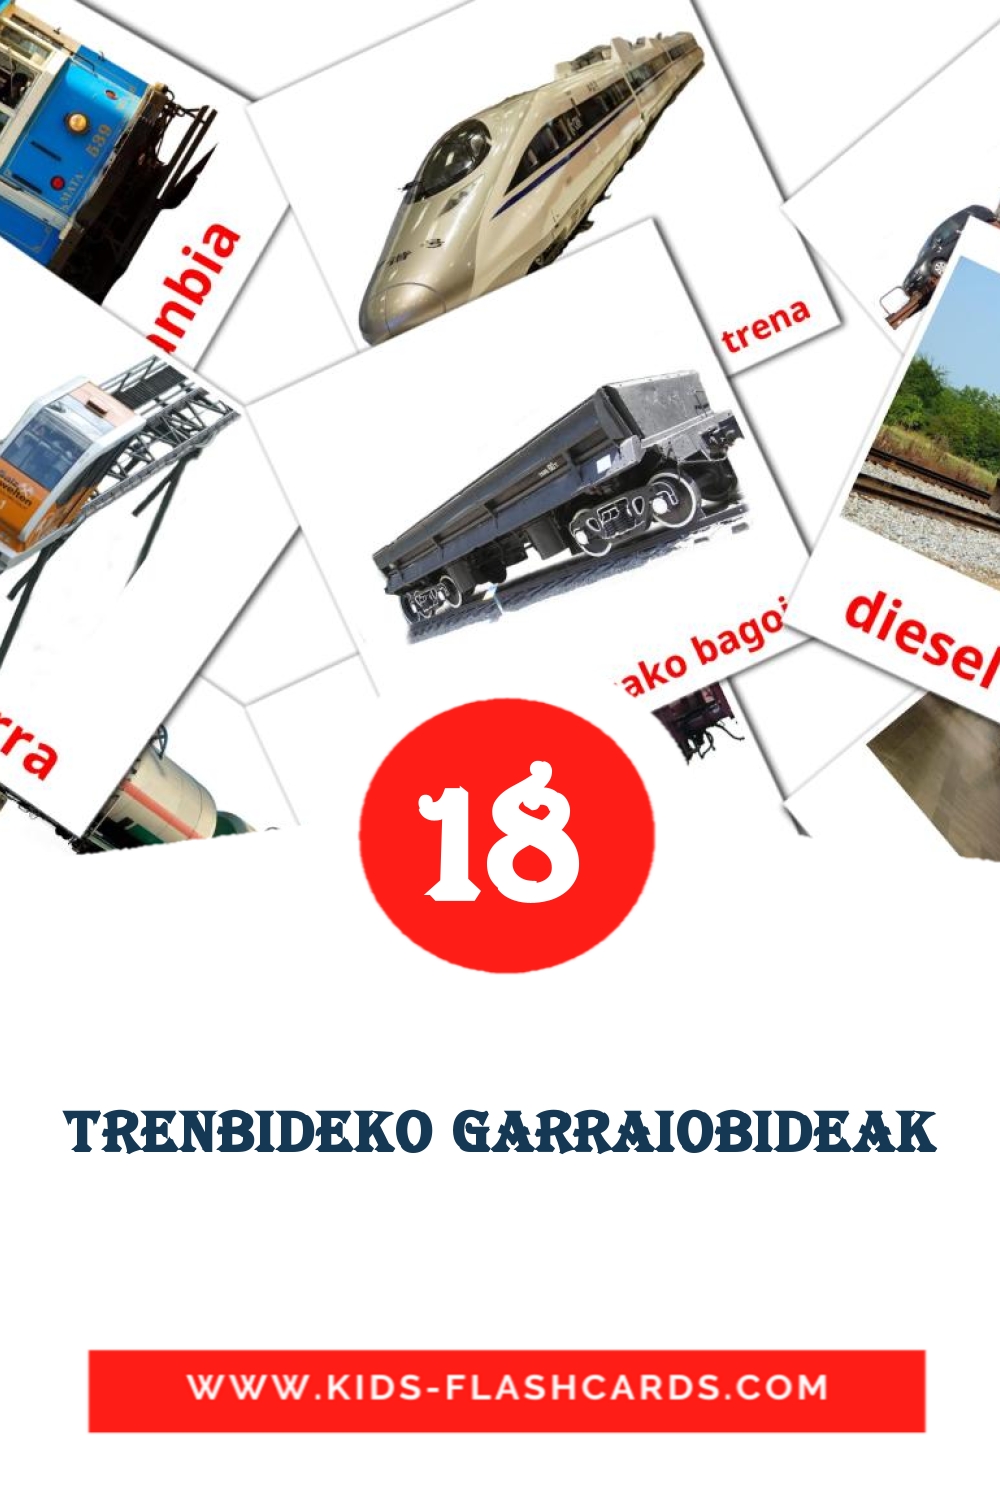 18 tarjetas didacticas de Trenbideko garraiobideak para el jardín de infancia en euskera